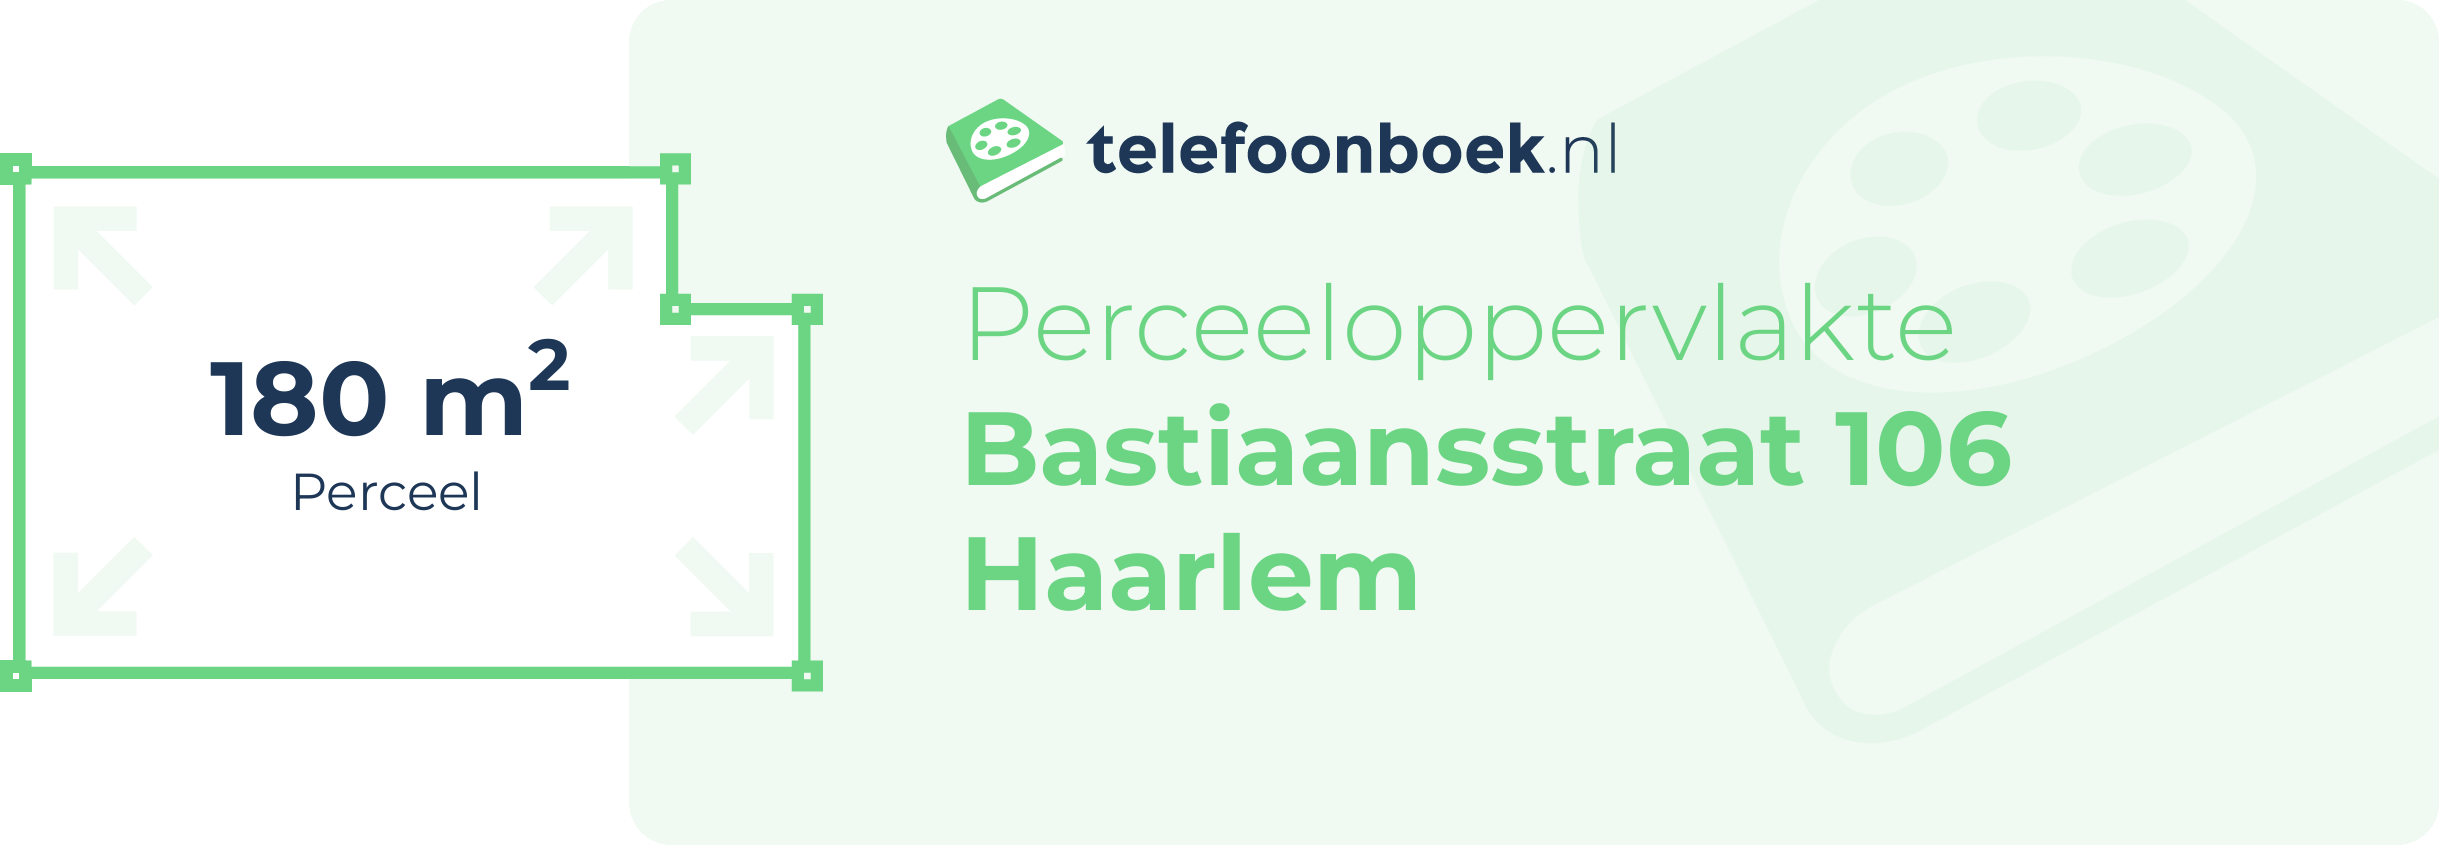 Perceeloppervlakte Bastiaansstraat 106 Haarlem